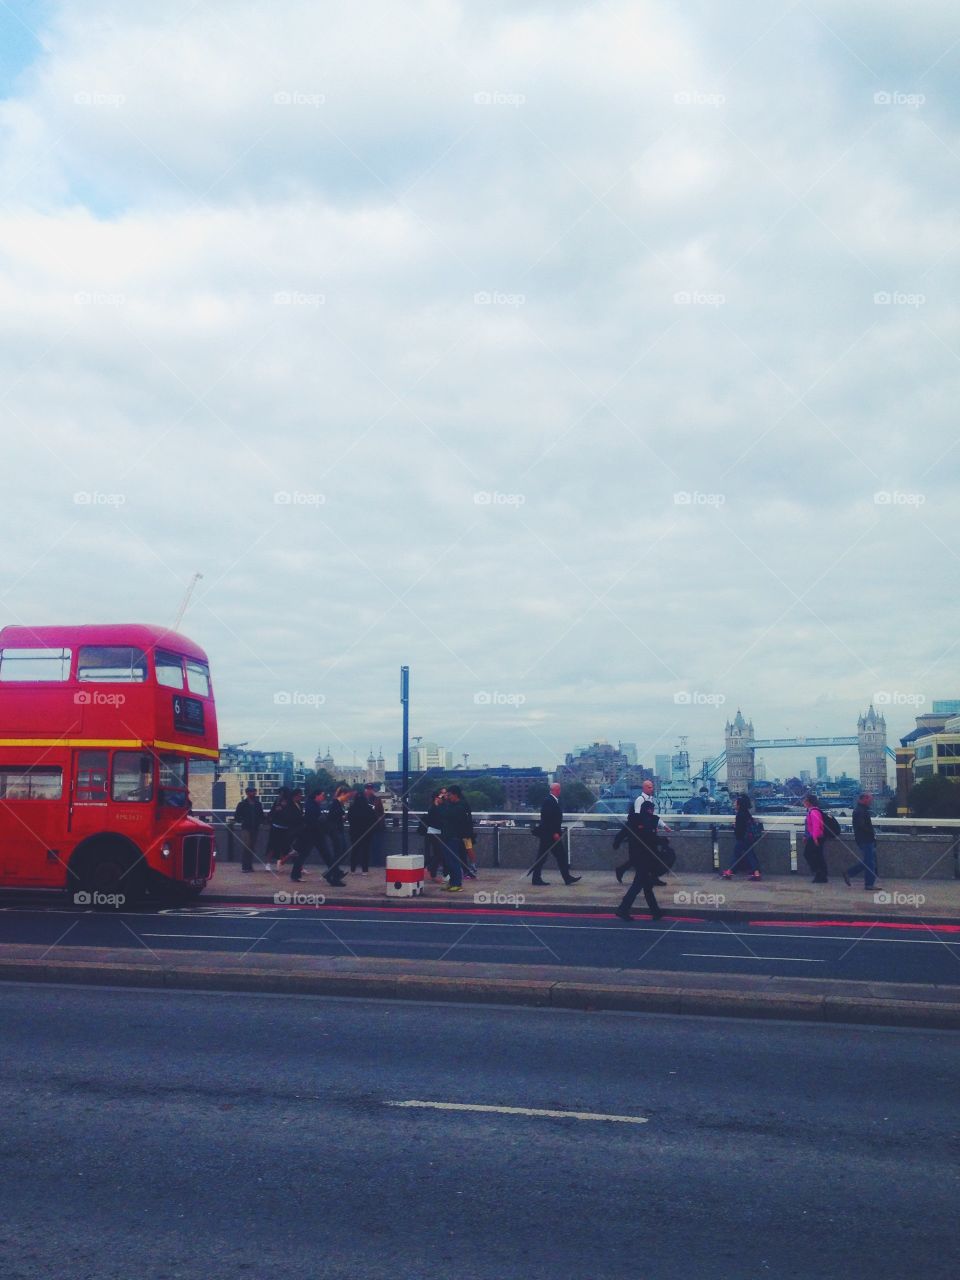 London days